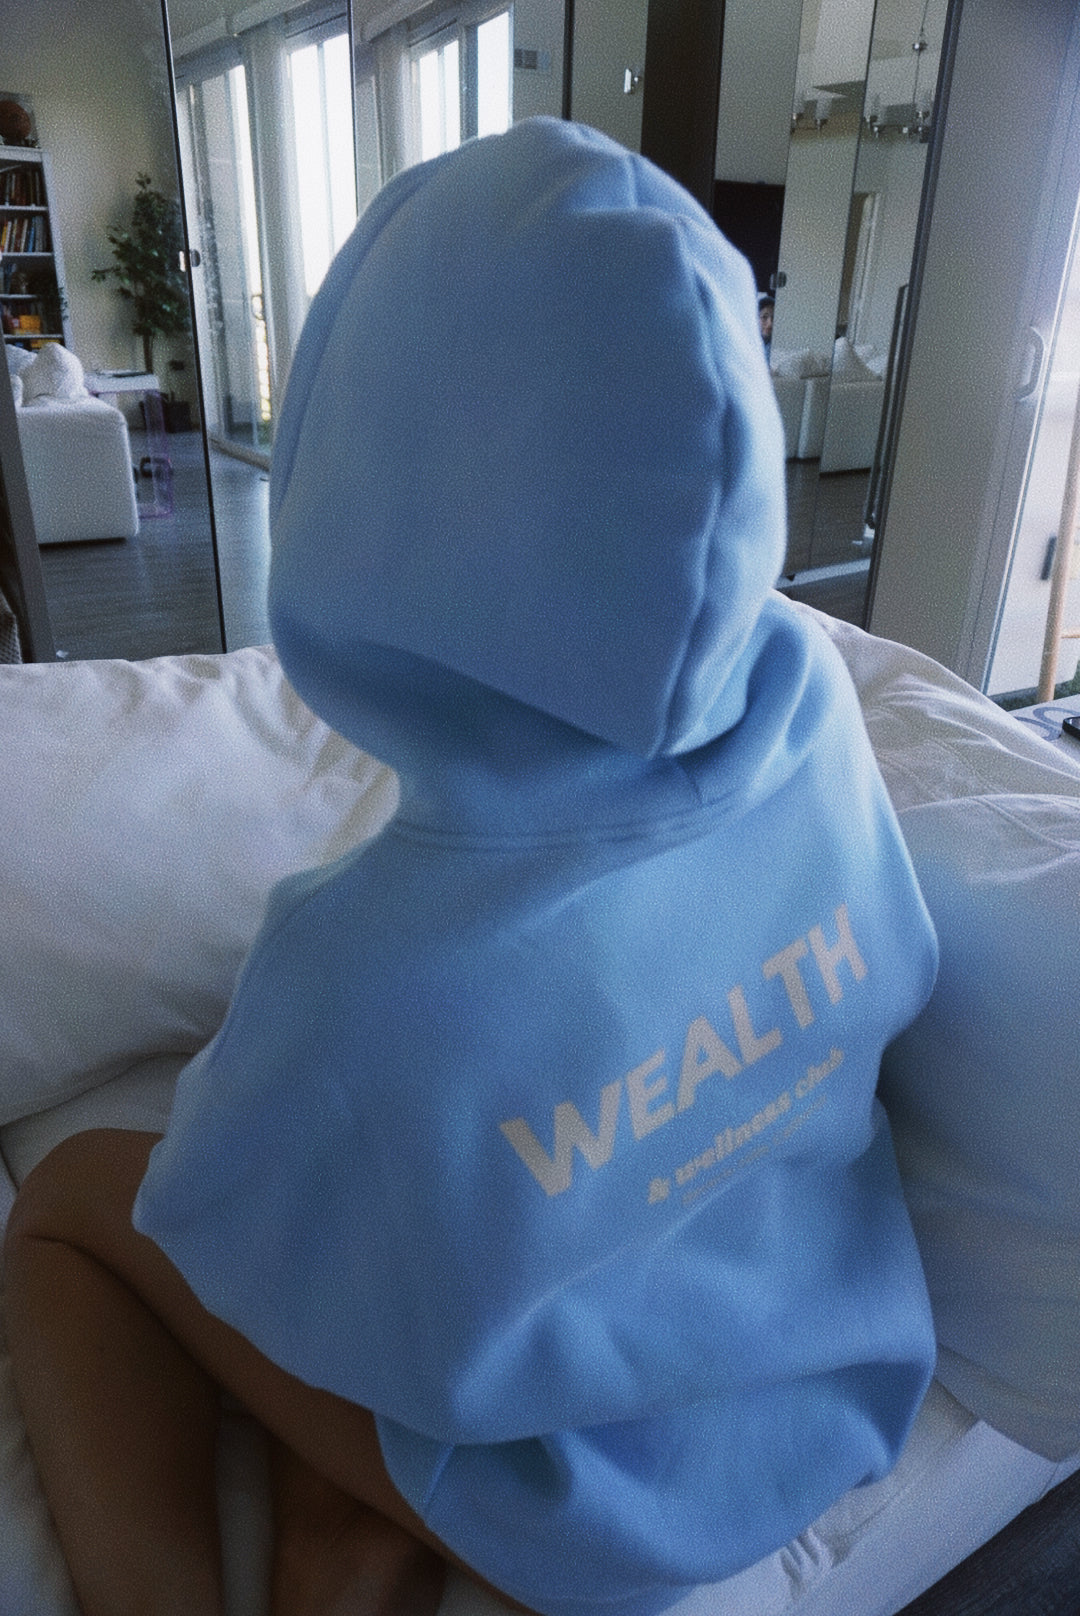 Wealth & Wellness Oversized Hoodie